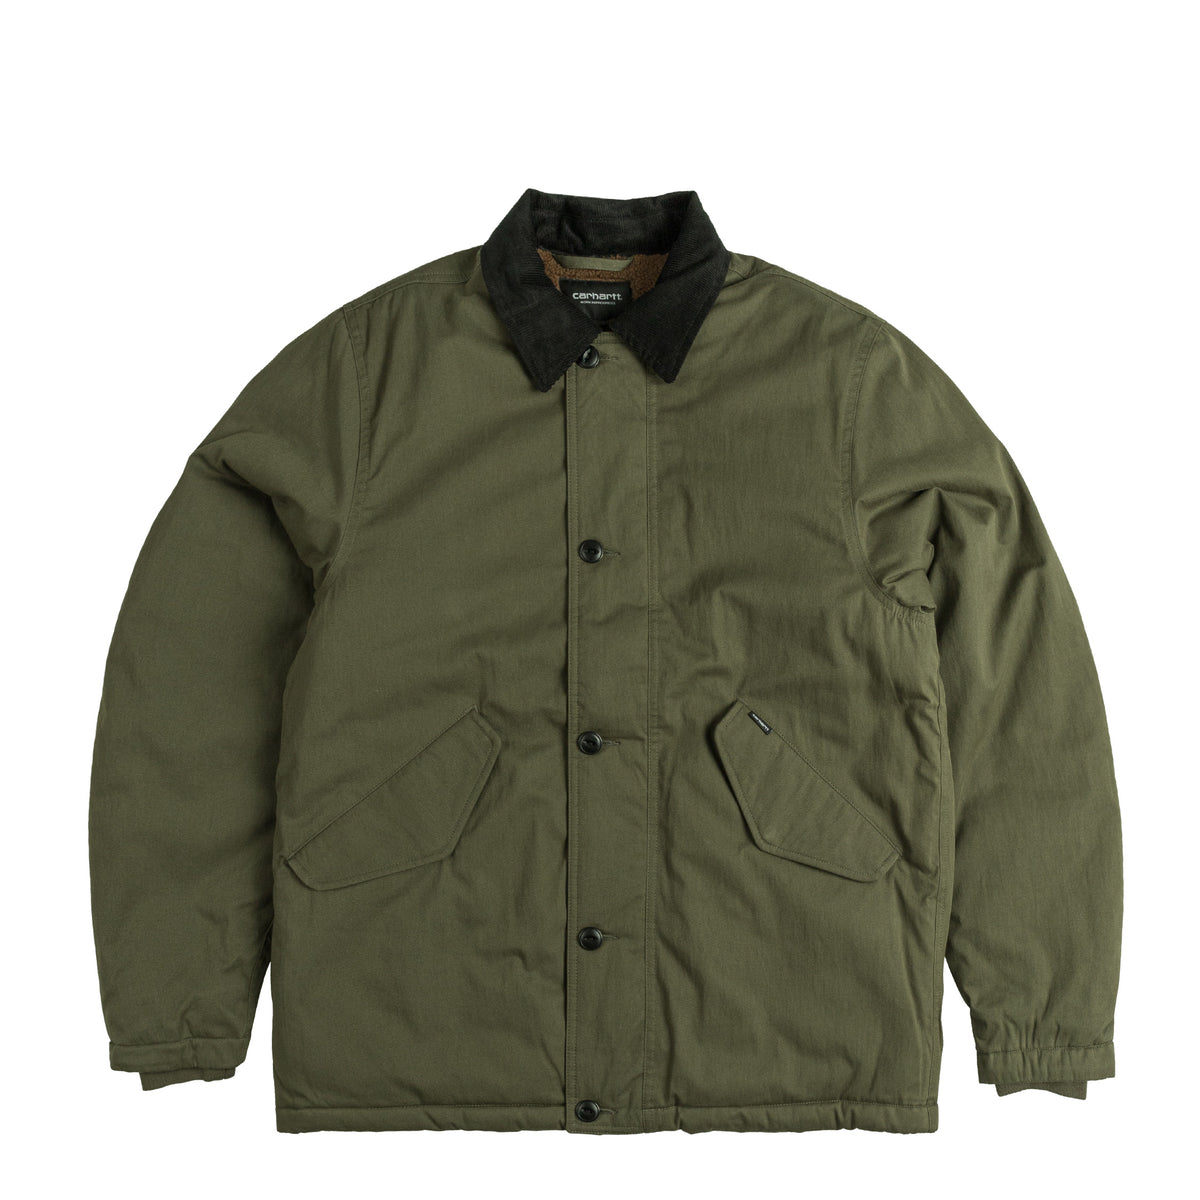 Carhartt WIP Declan Jacket – buy now at Asphaltgold Online Store!